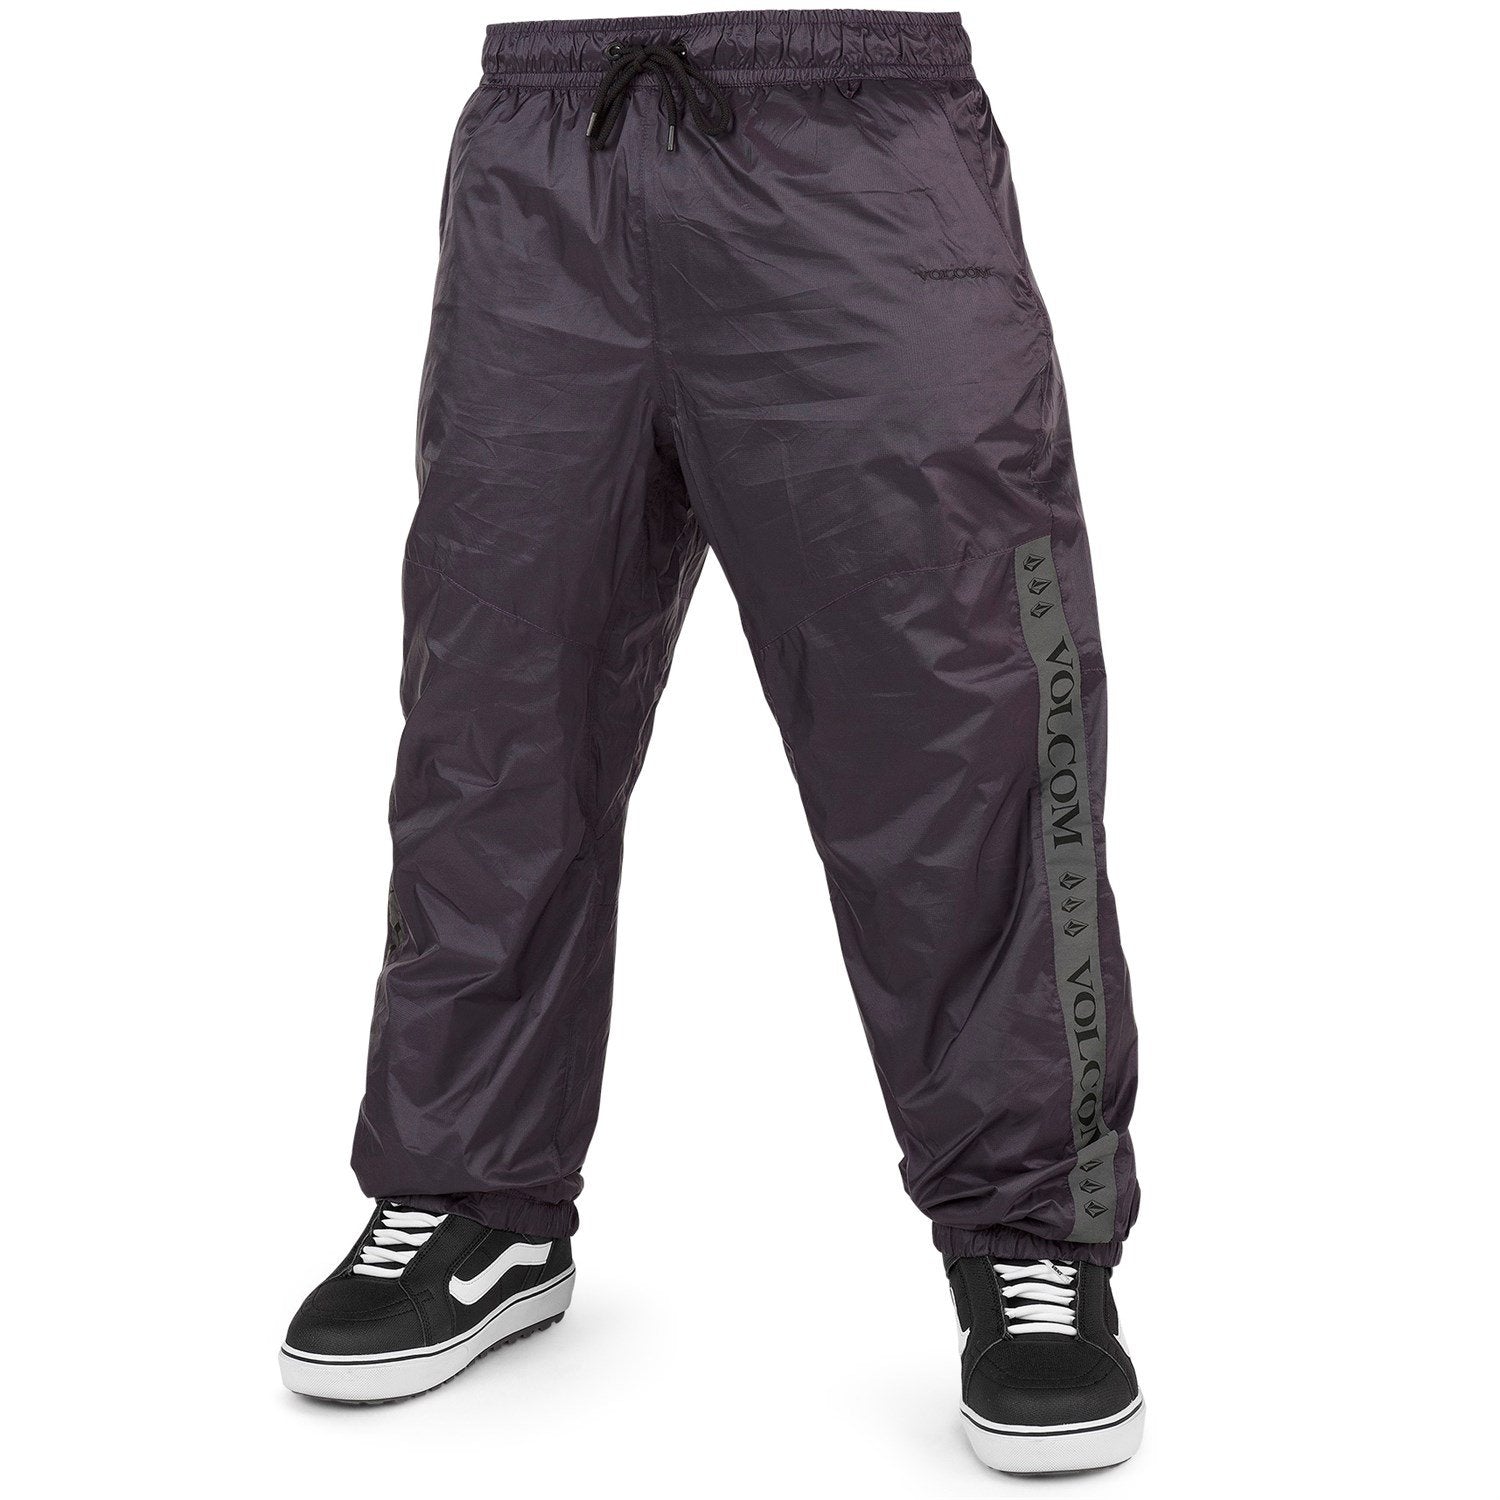 Purple New Slashlapper Volcom Snow Pants